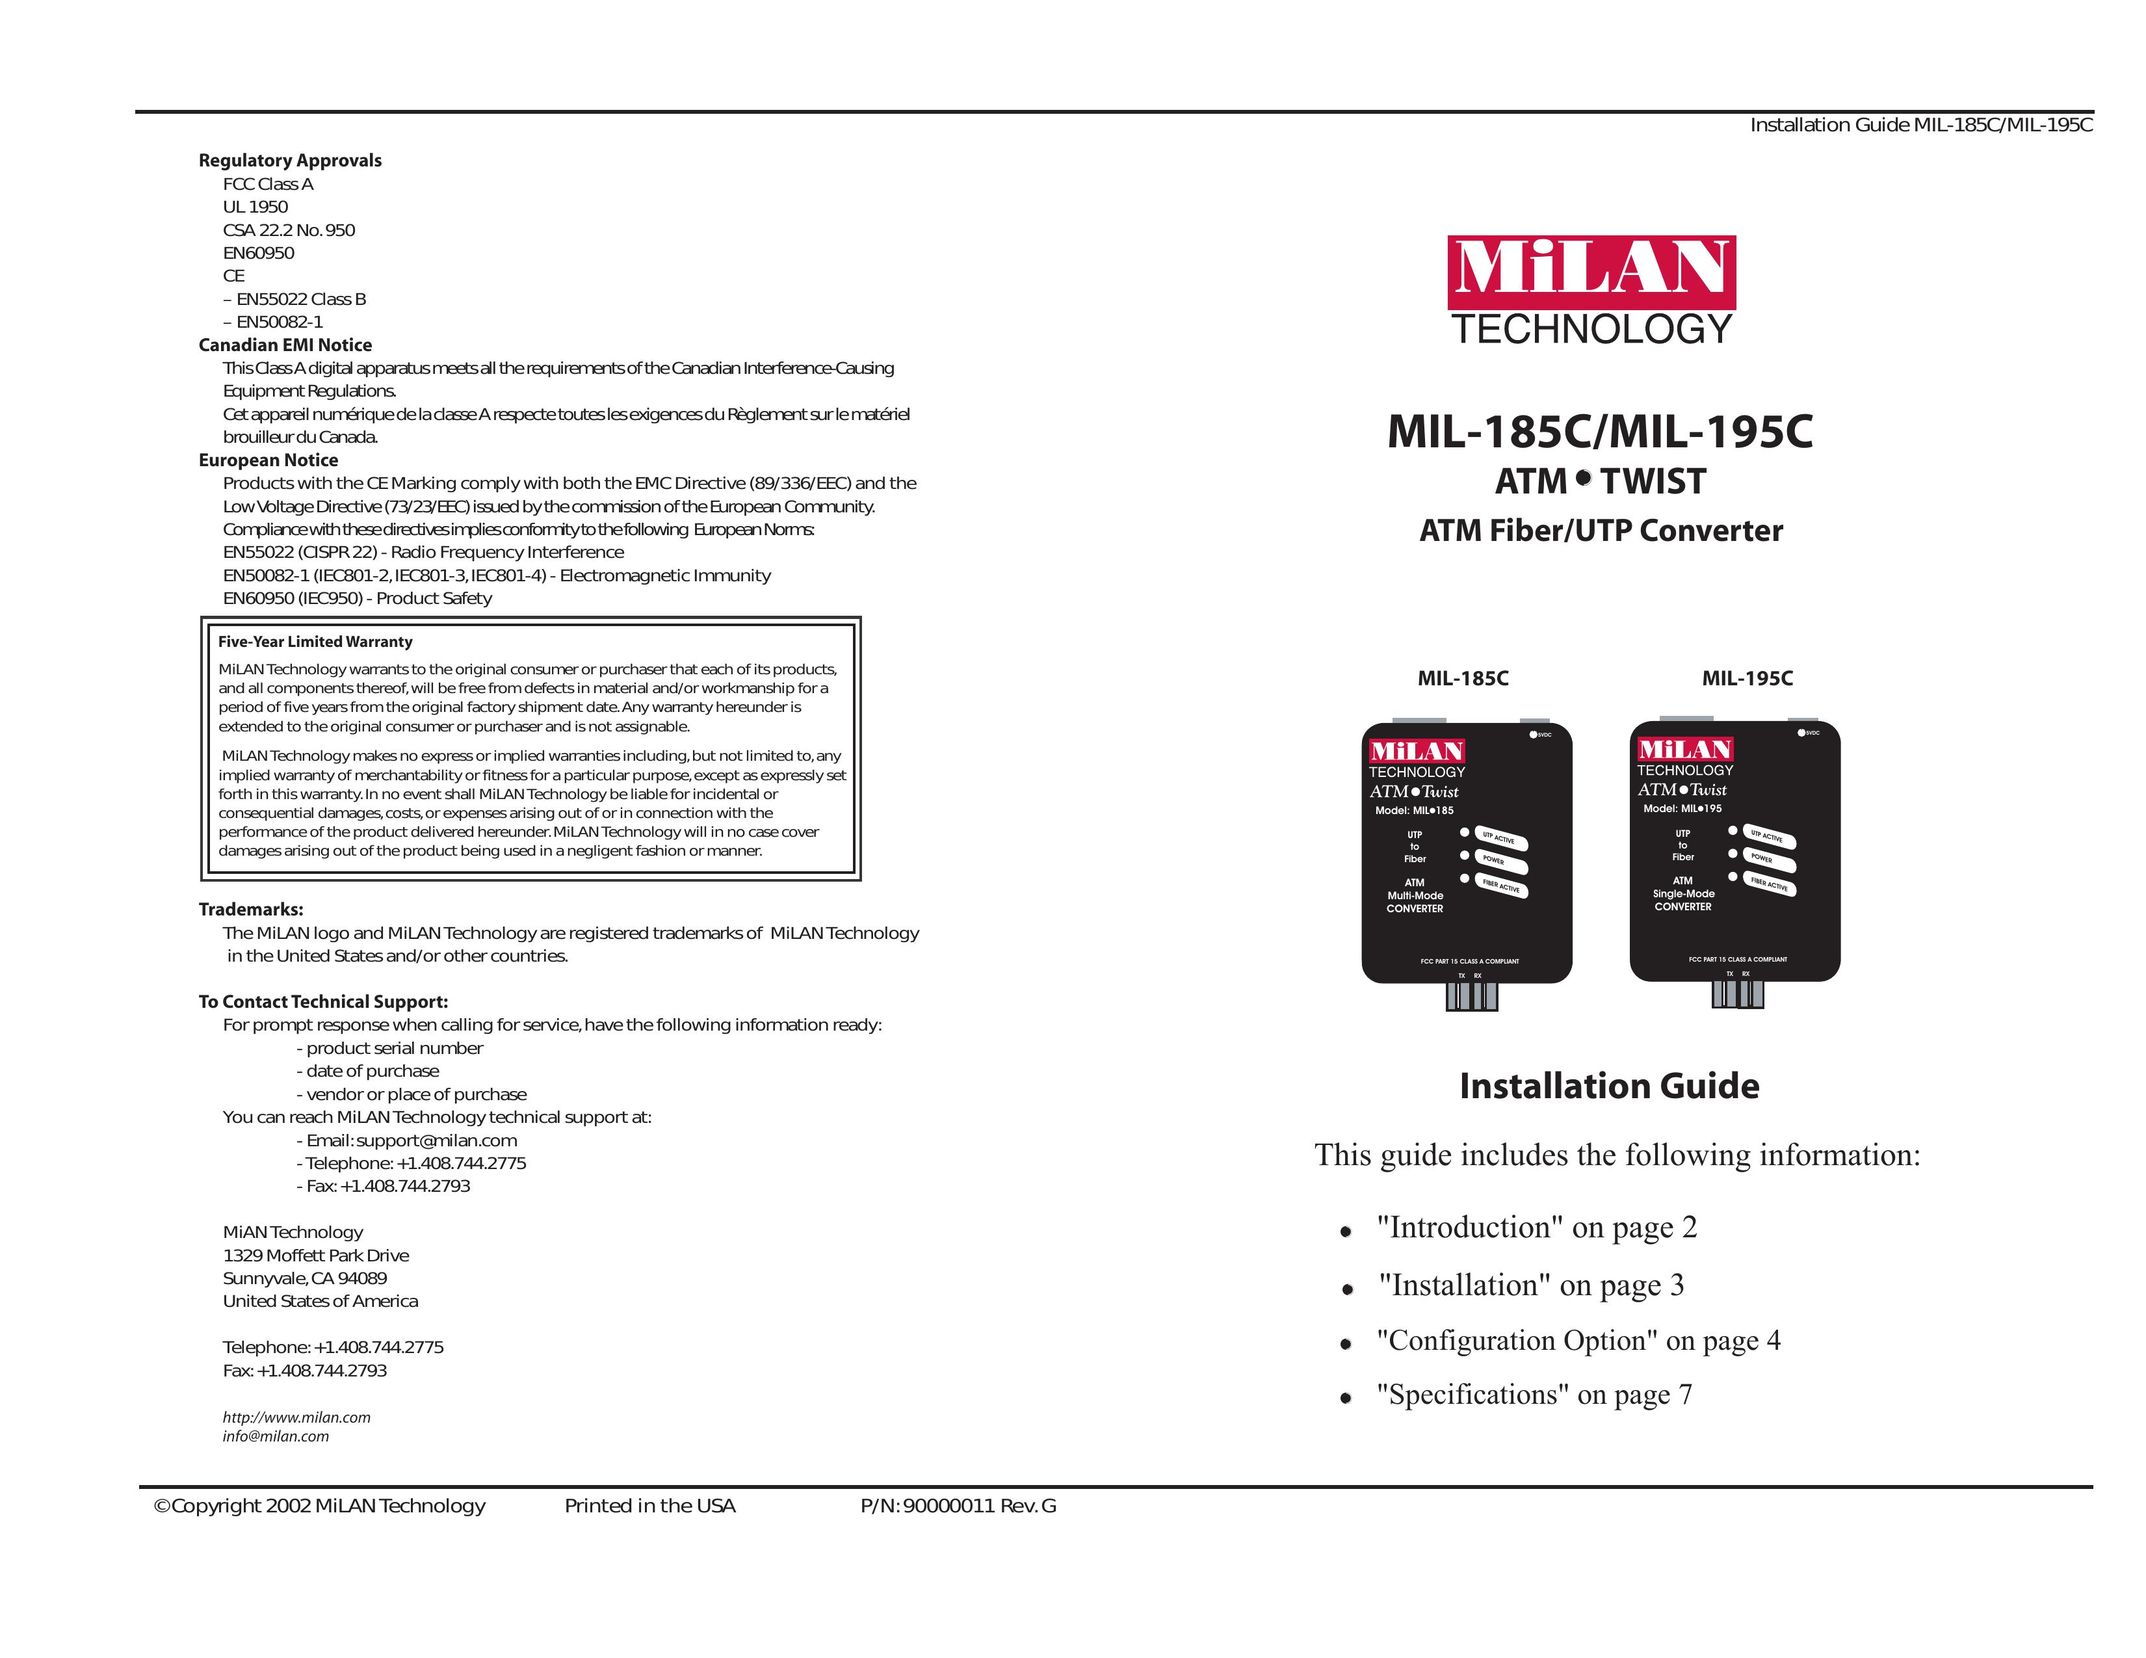 Milan Technology MIL-195C Network Card User Manual